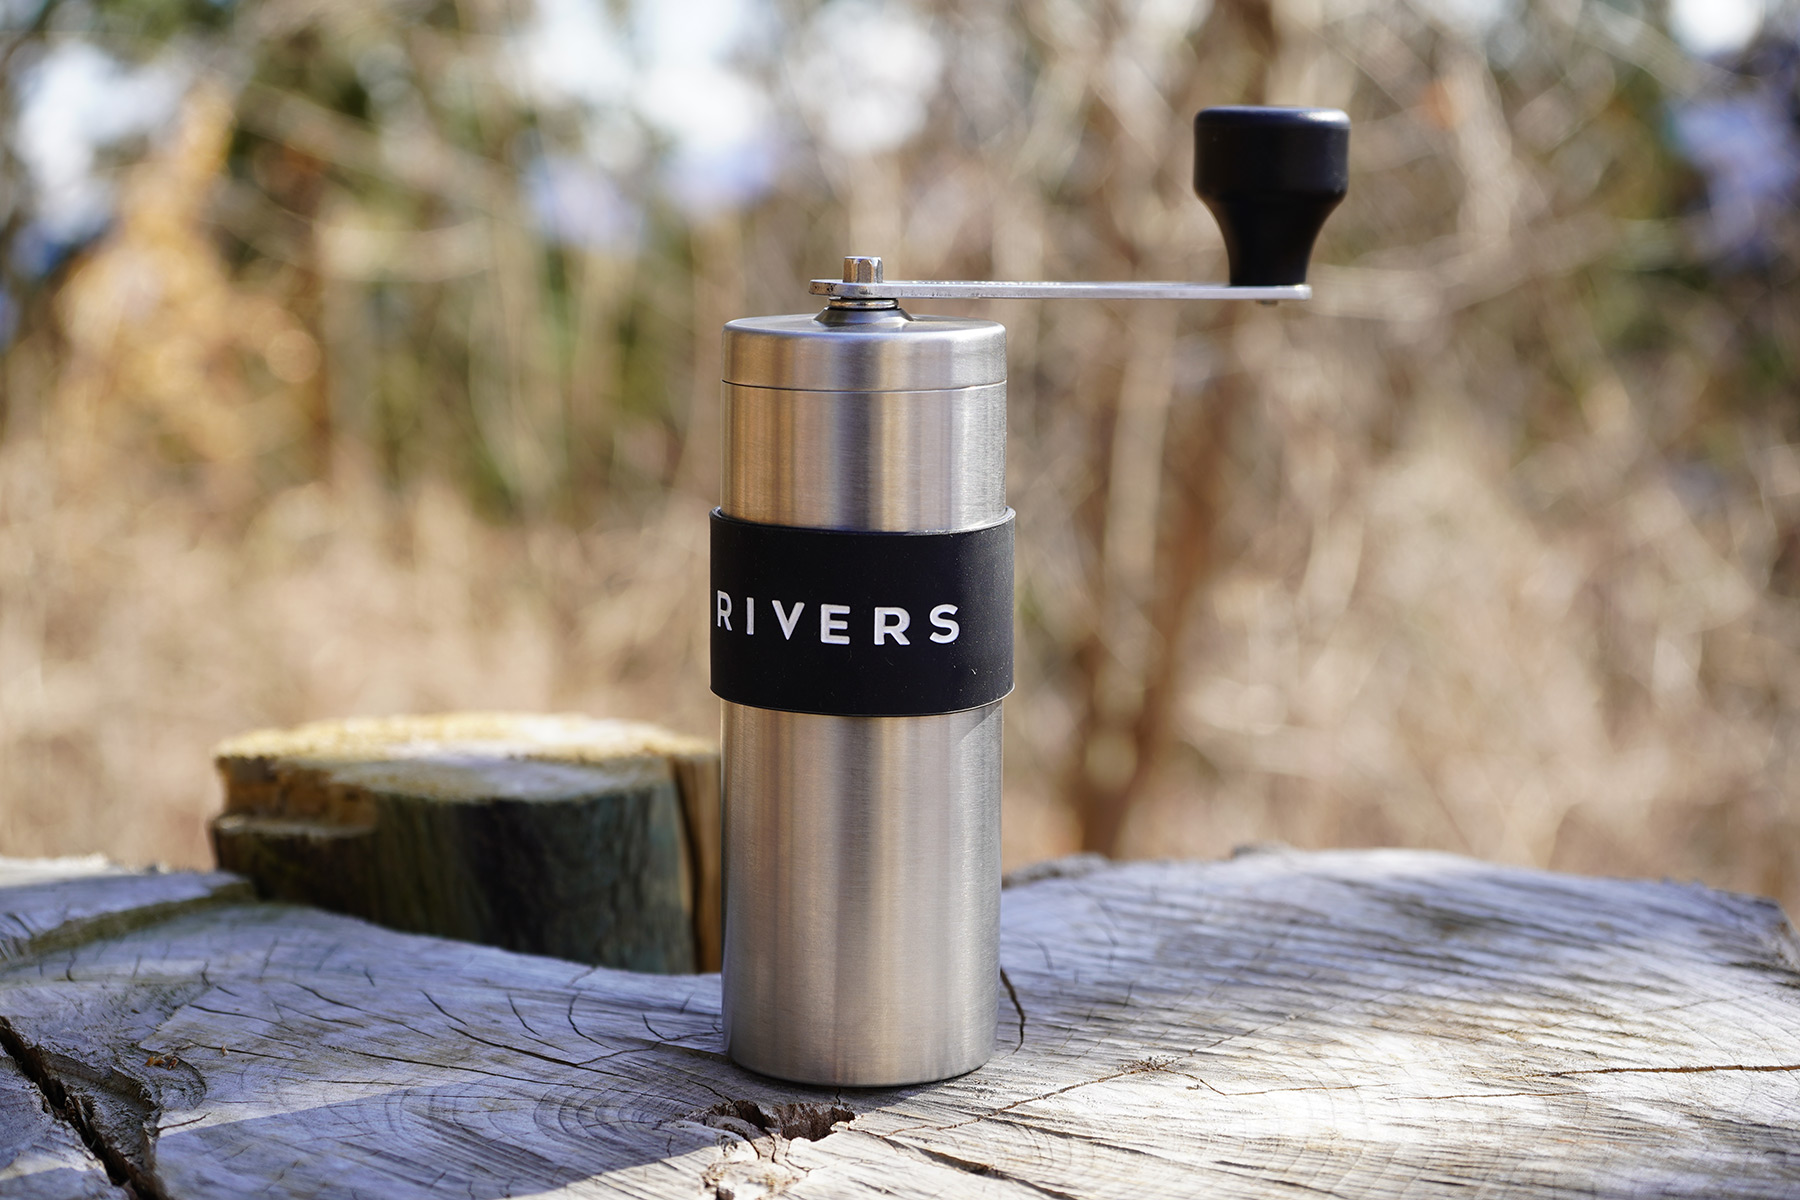 Premium Electric Burr Coffee Grinder - White – Wild Rivers Coffee Co